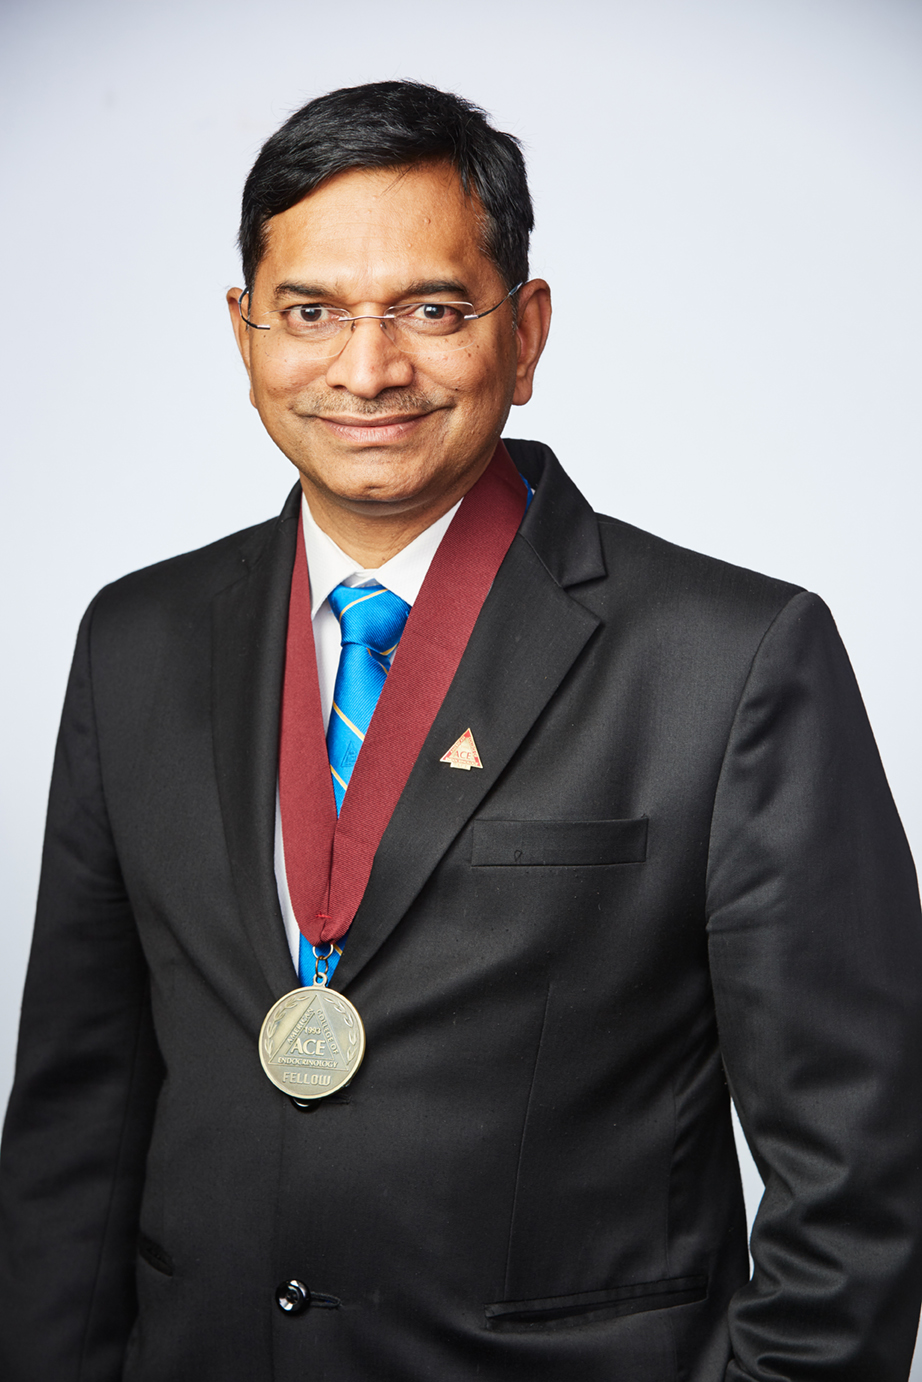 Dr. Sunil Gupta AACE